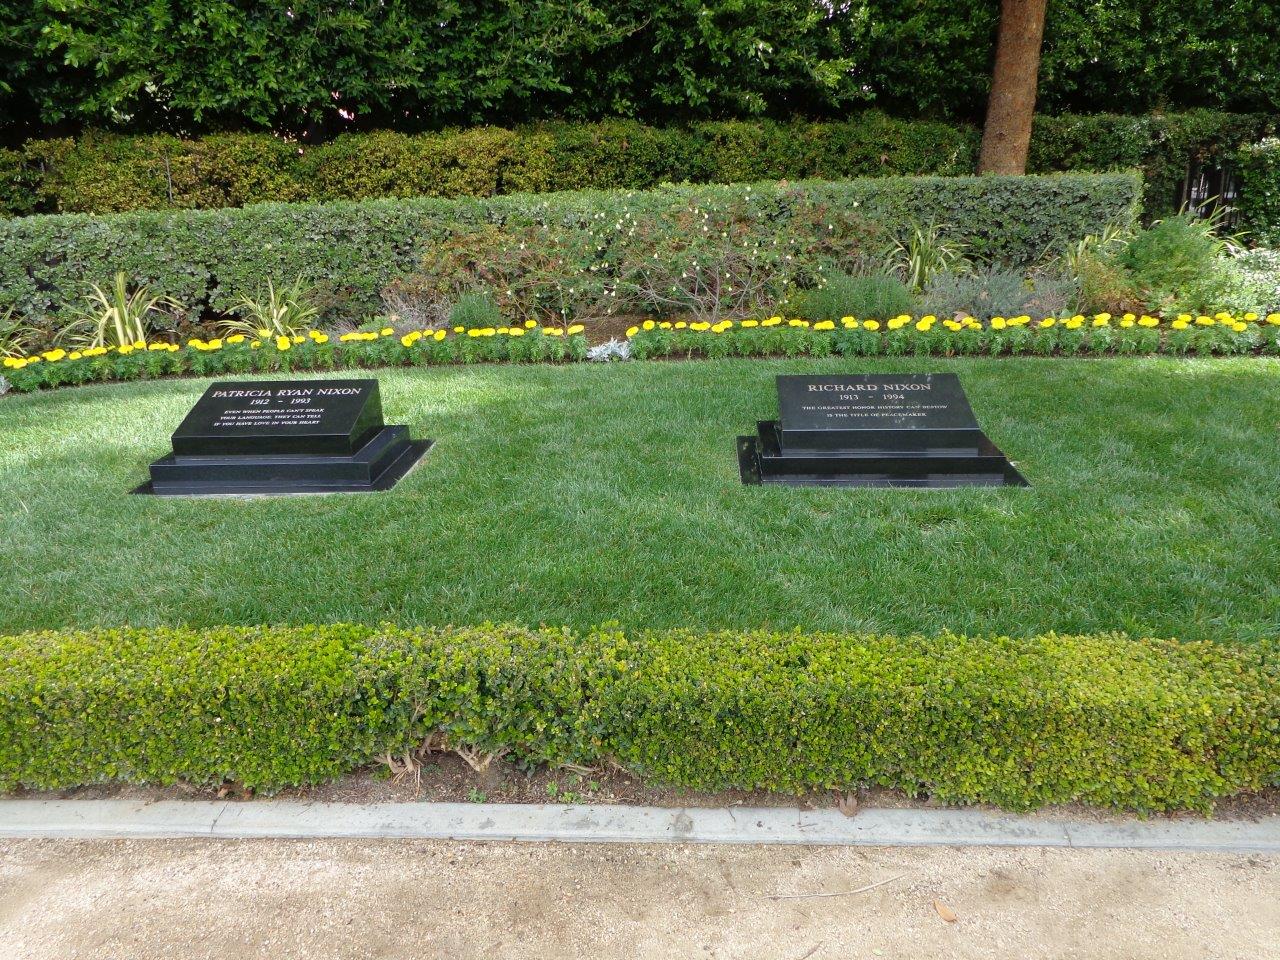 Richard Nixon grave